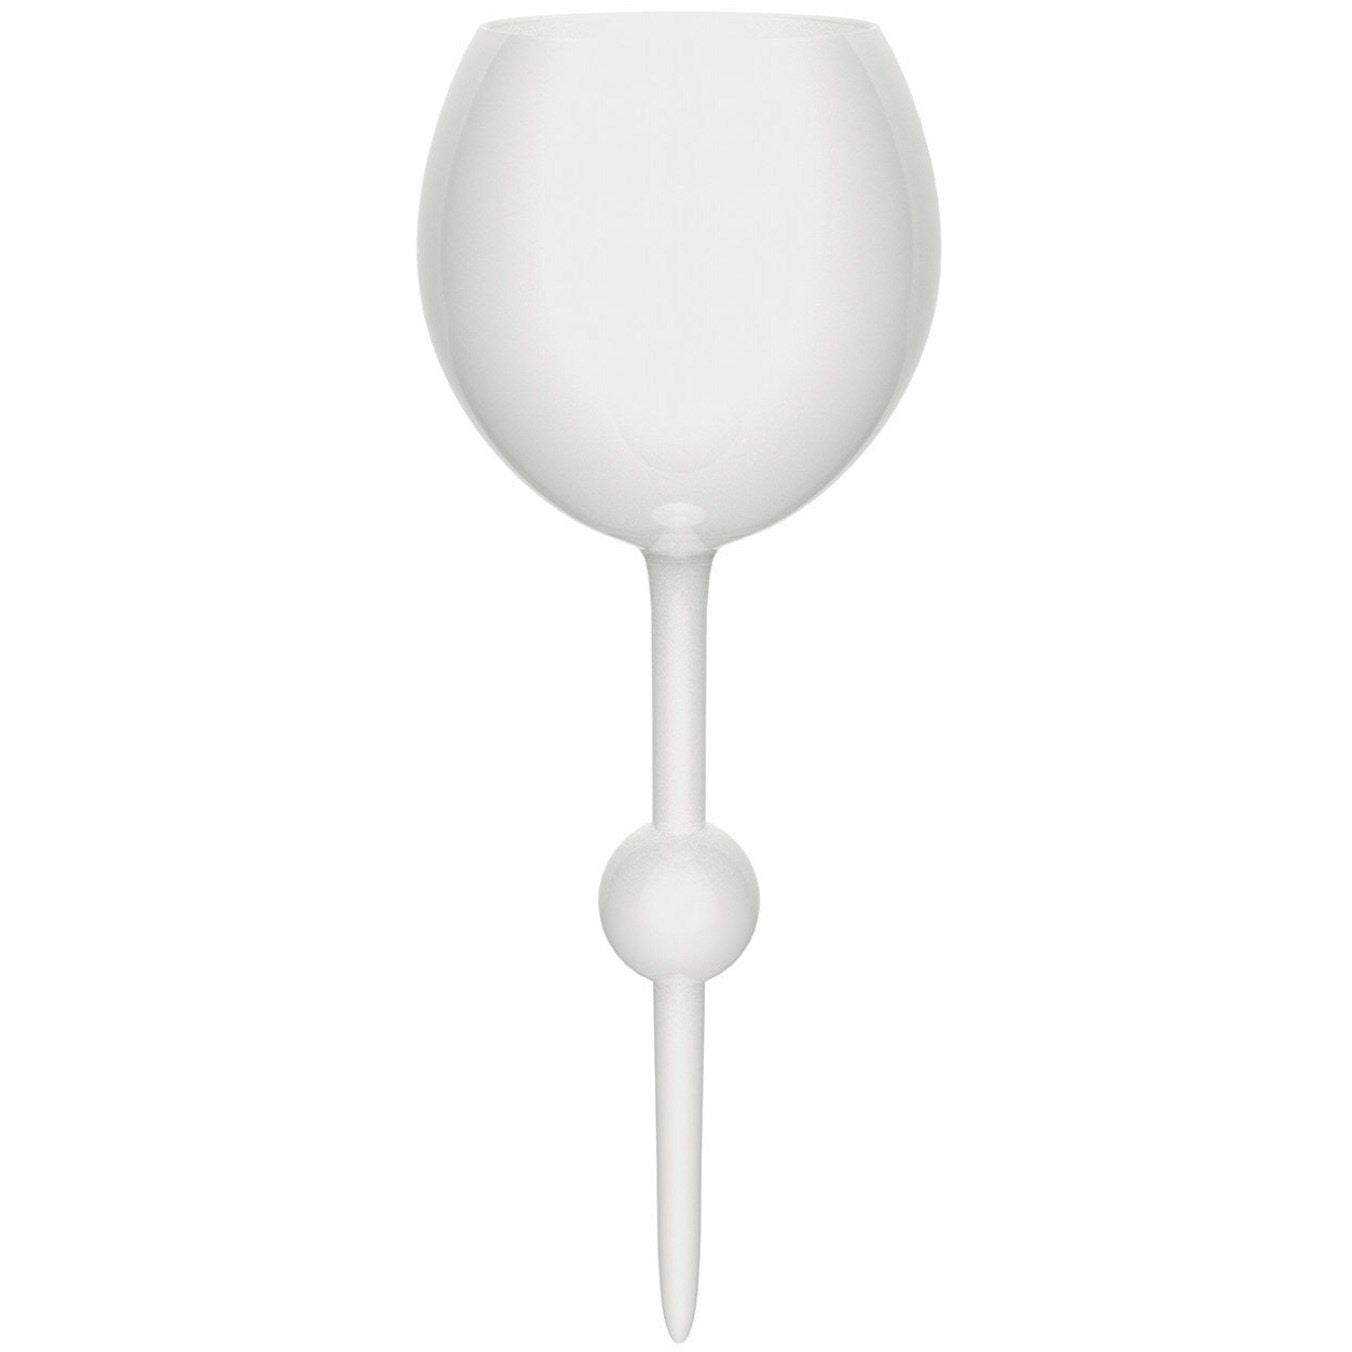 Caspari Acrylic Champagne Flute - Clear